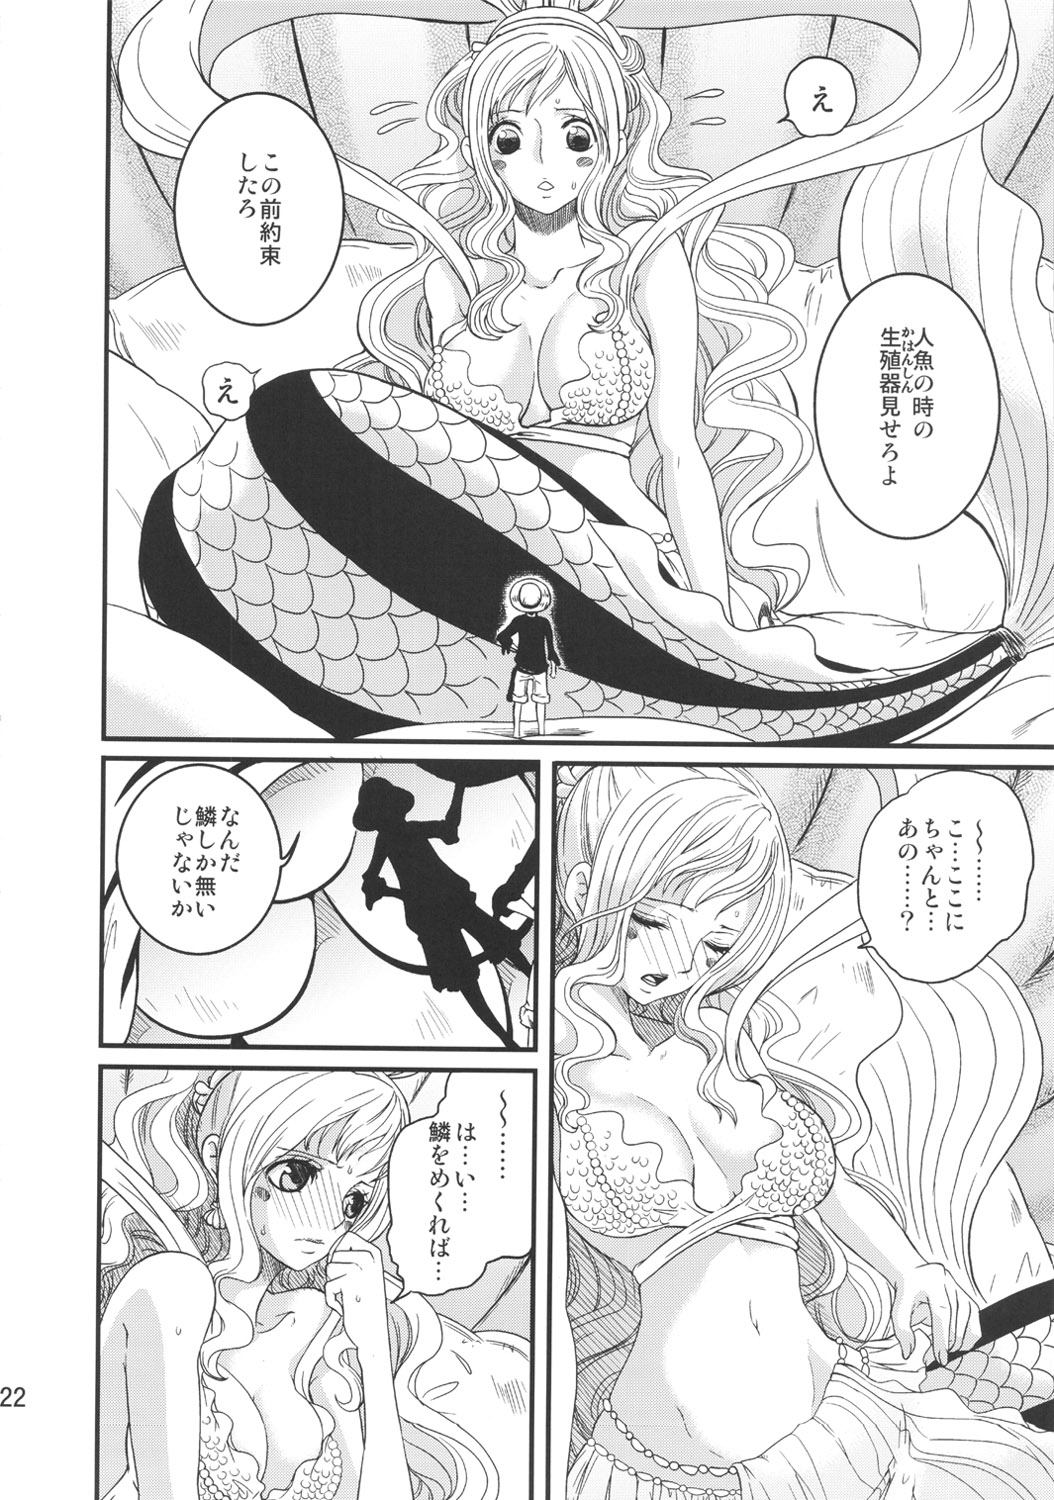 Read C Queen Of VANILLA Tigusa Suzume Ningyohime One Piece Hentai Porns Manga And